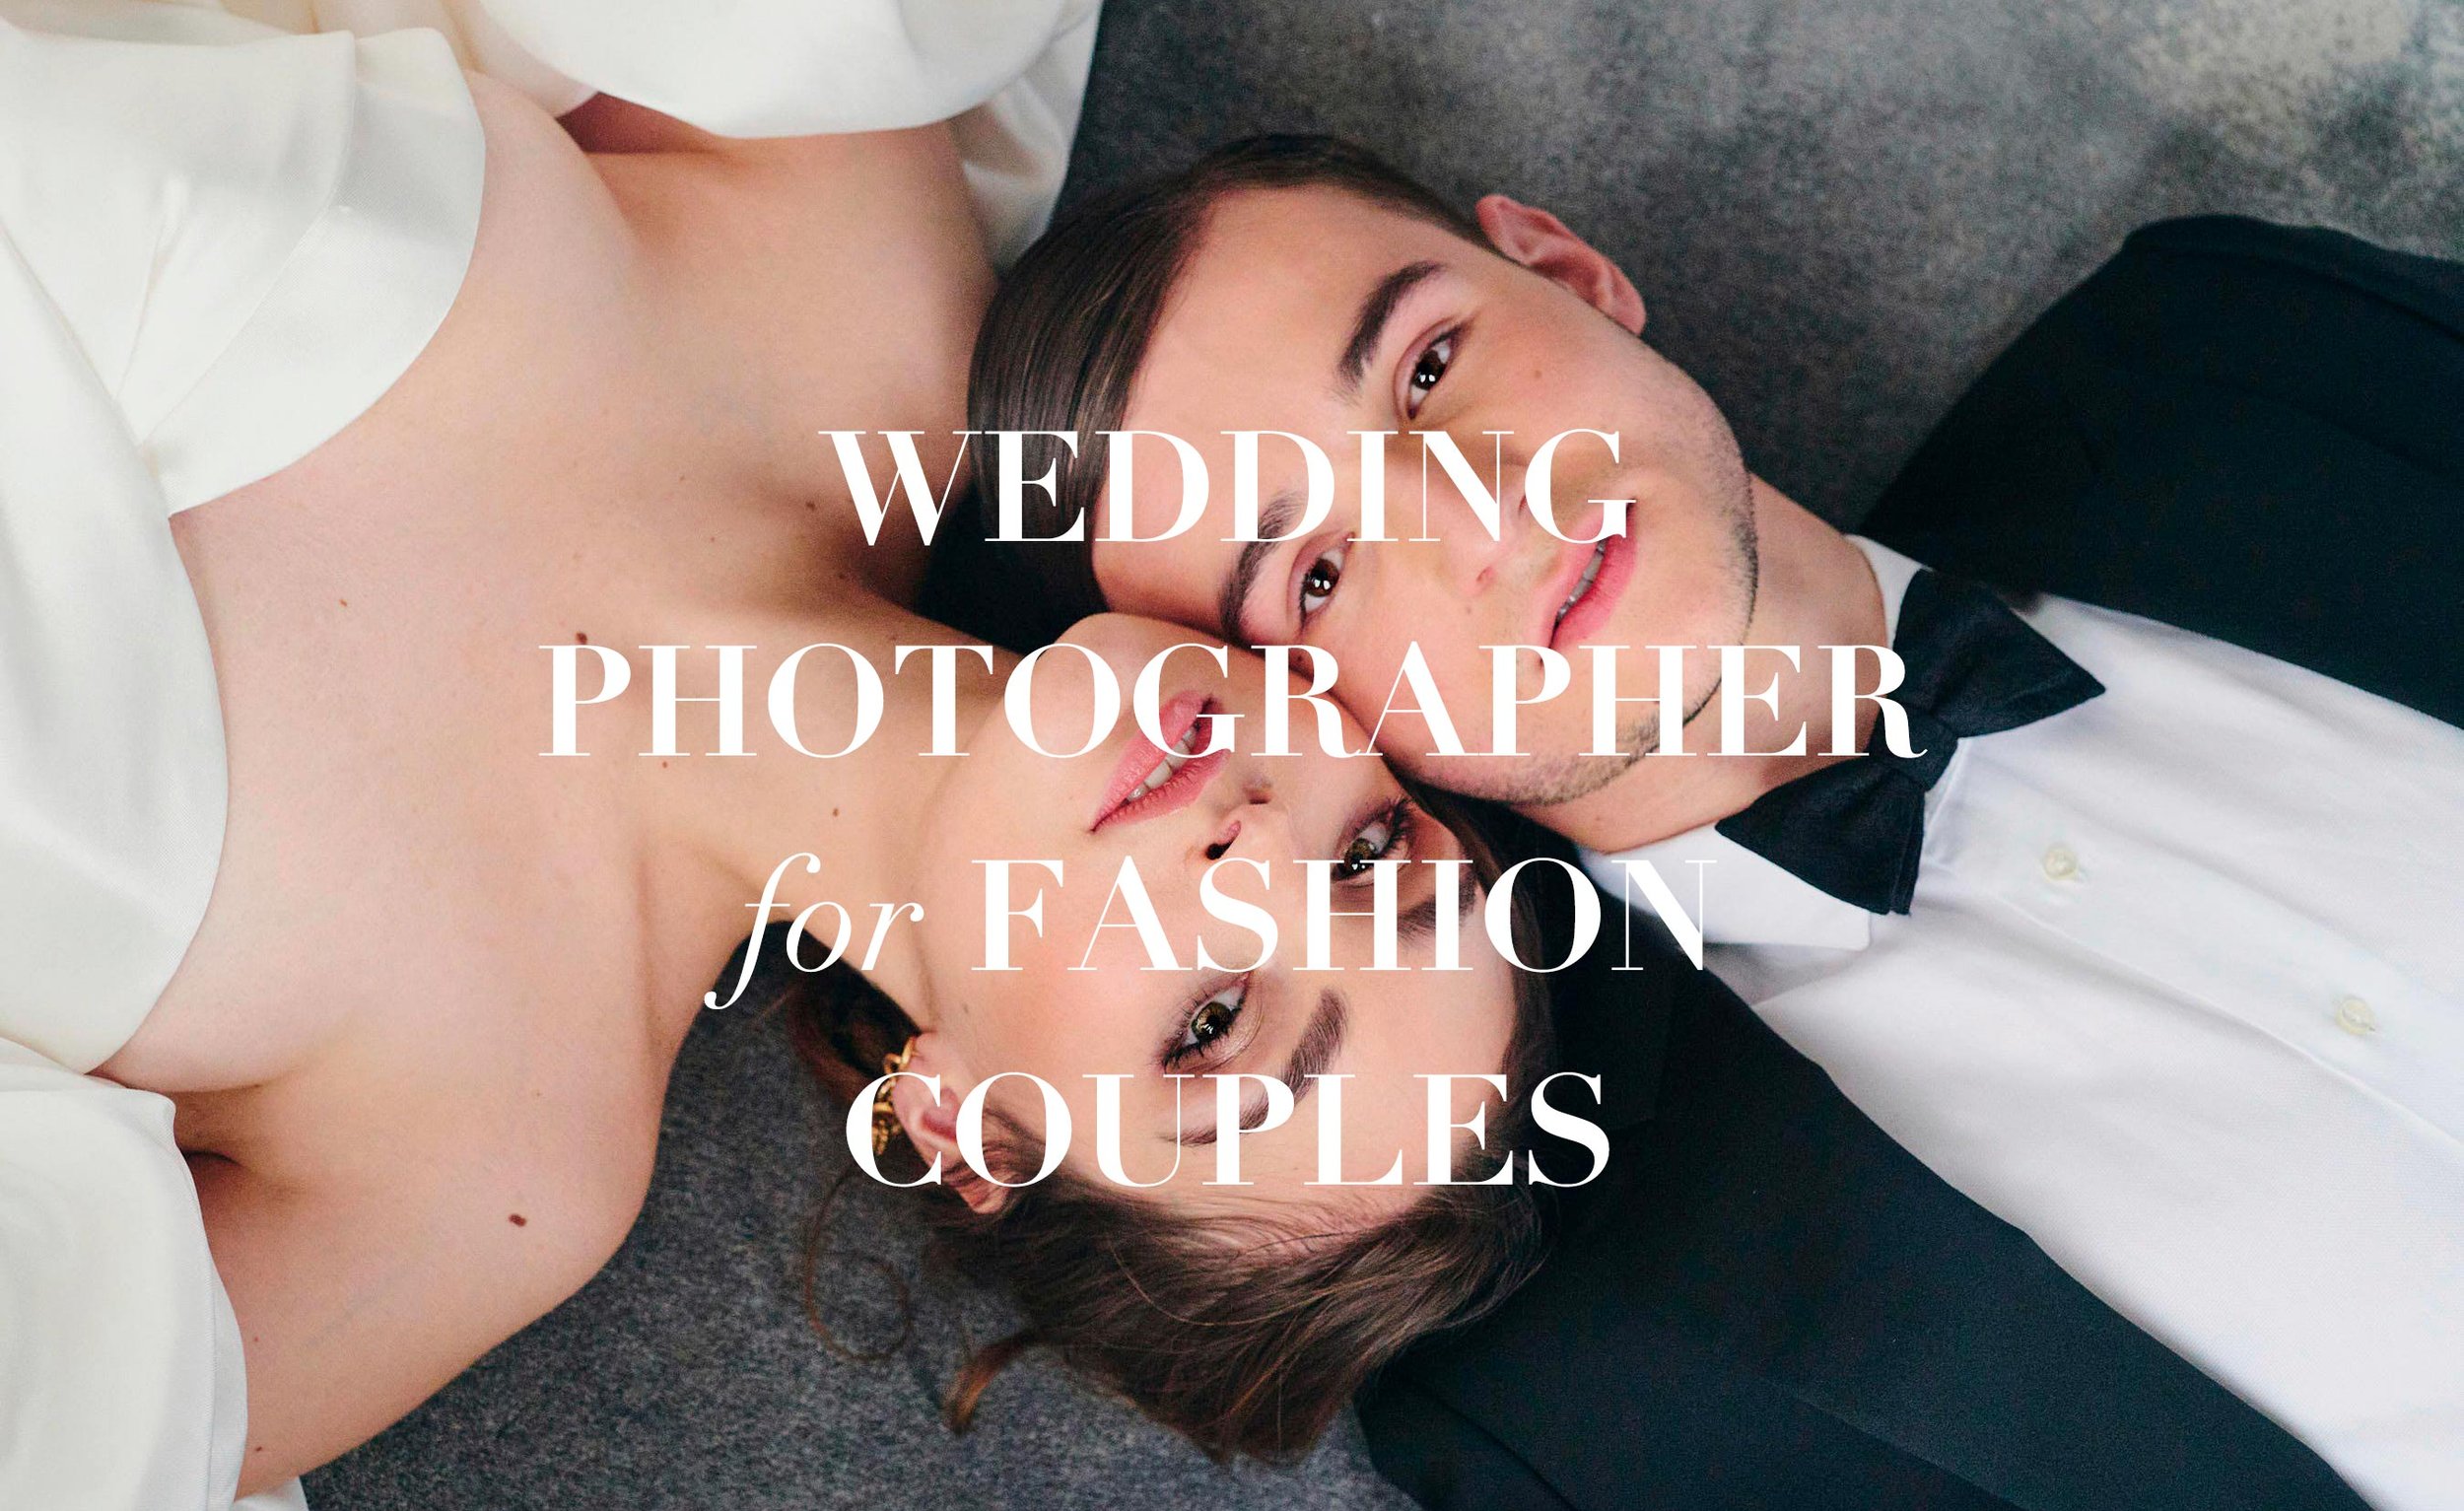 David_picchio_fashion_wedding_photographer_couple_paris_france_elopment_homepage_03a.jpg